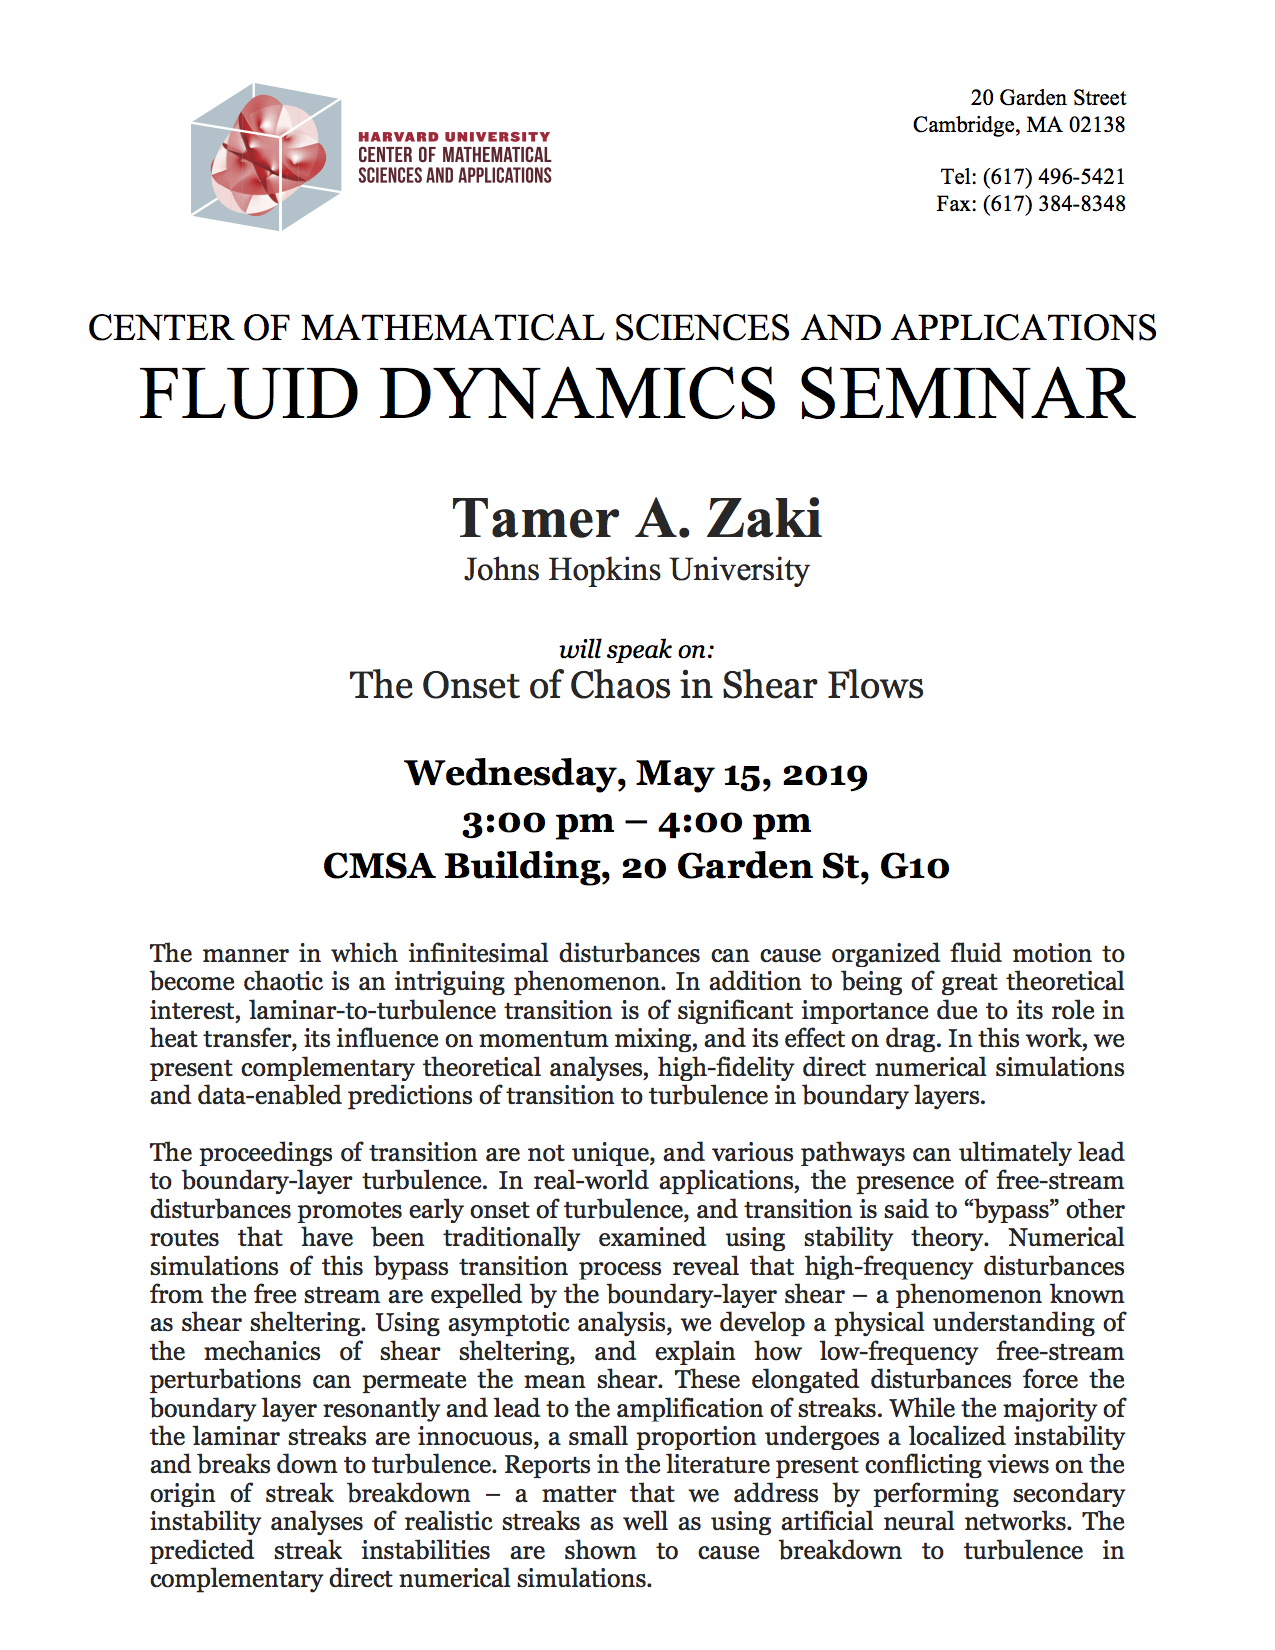 5/15/2019 Fluid Dynamics